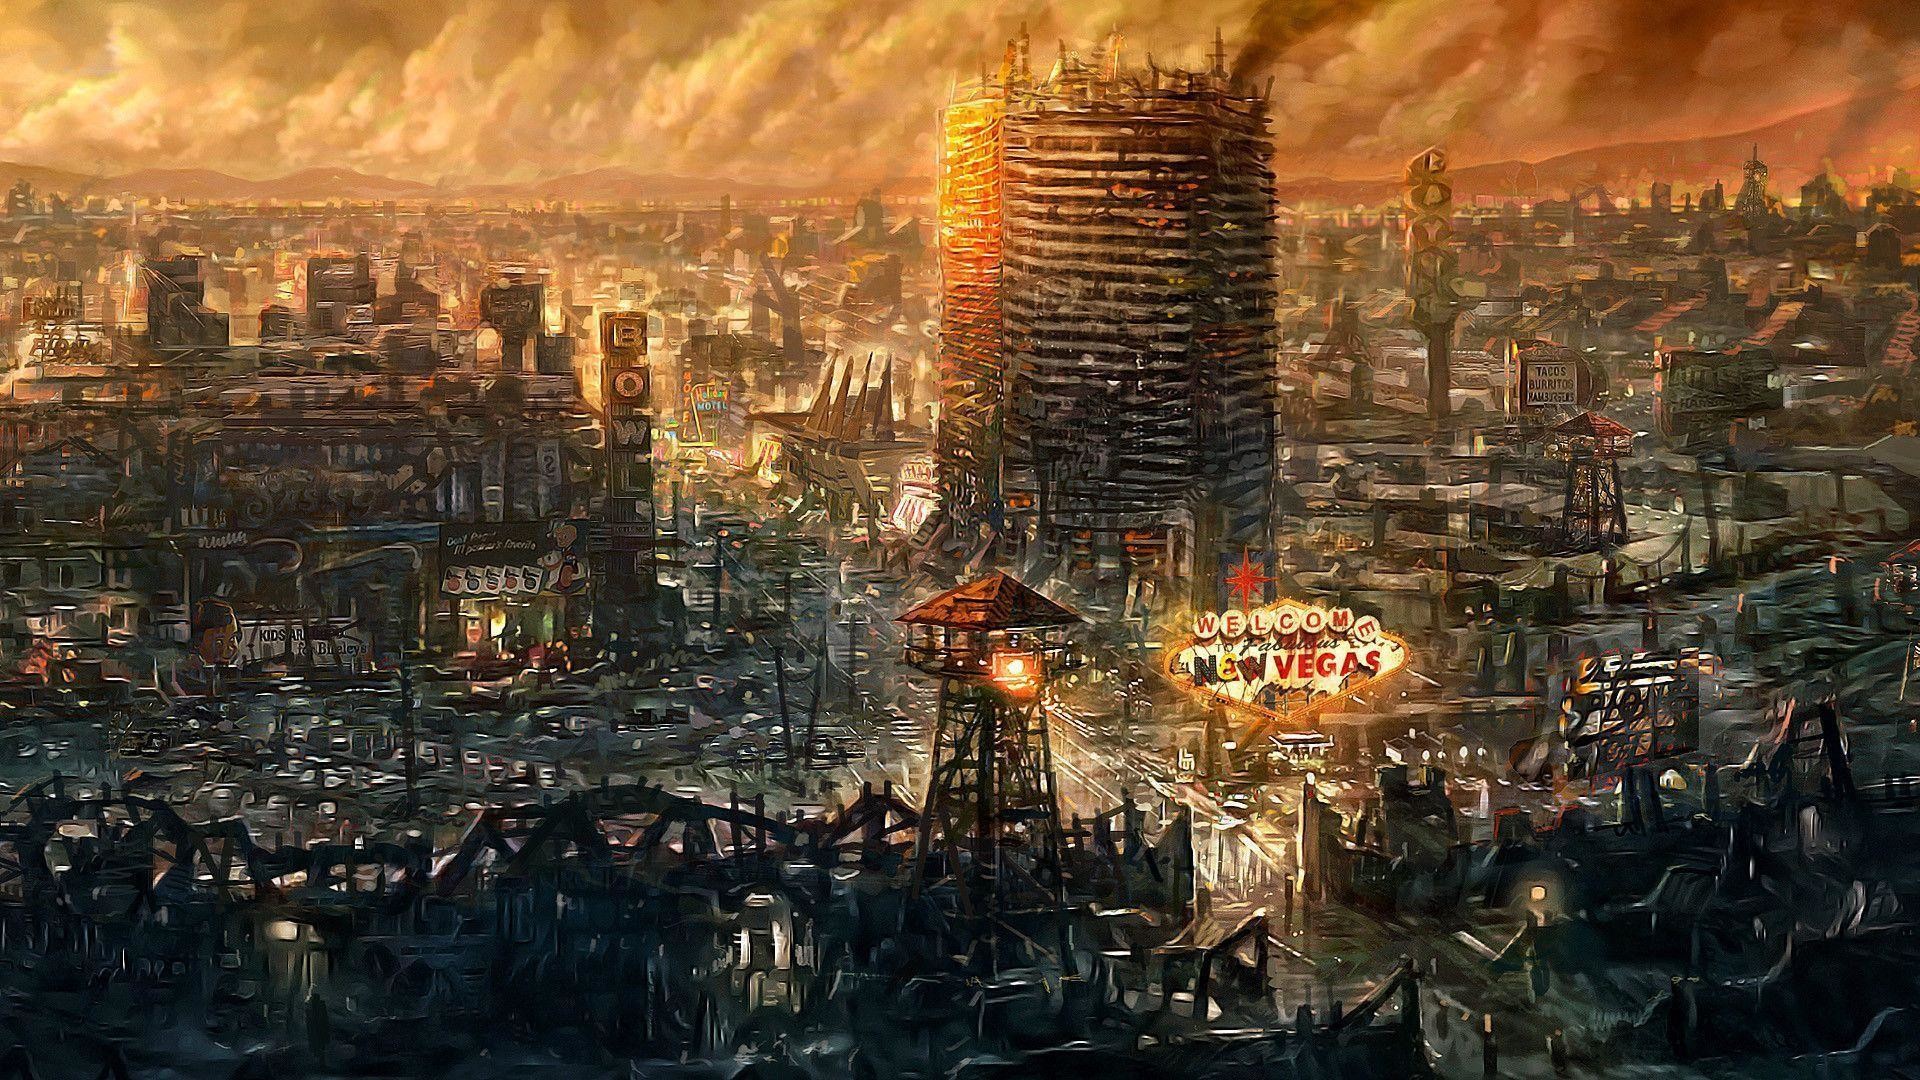 Fallout New Vegas Background Image